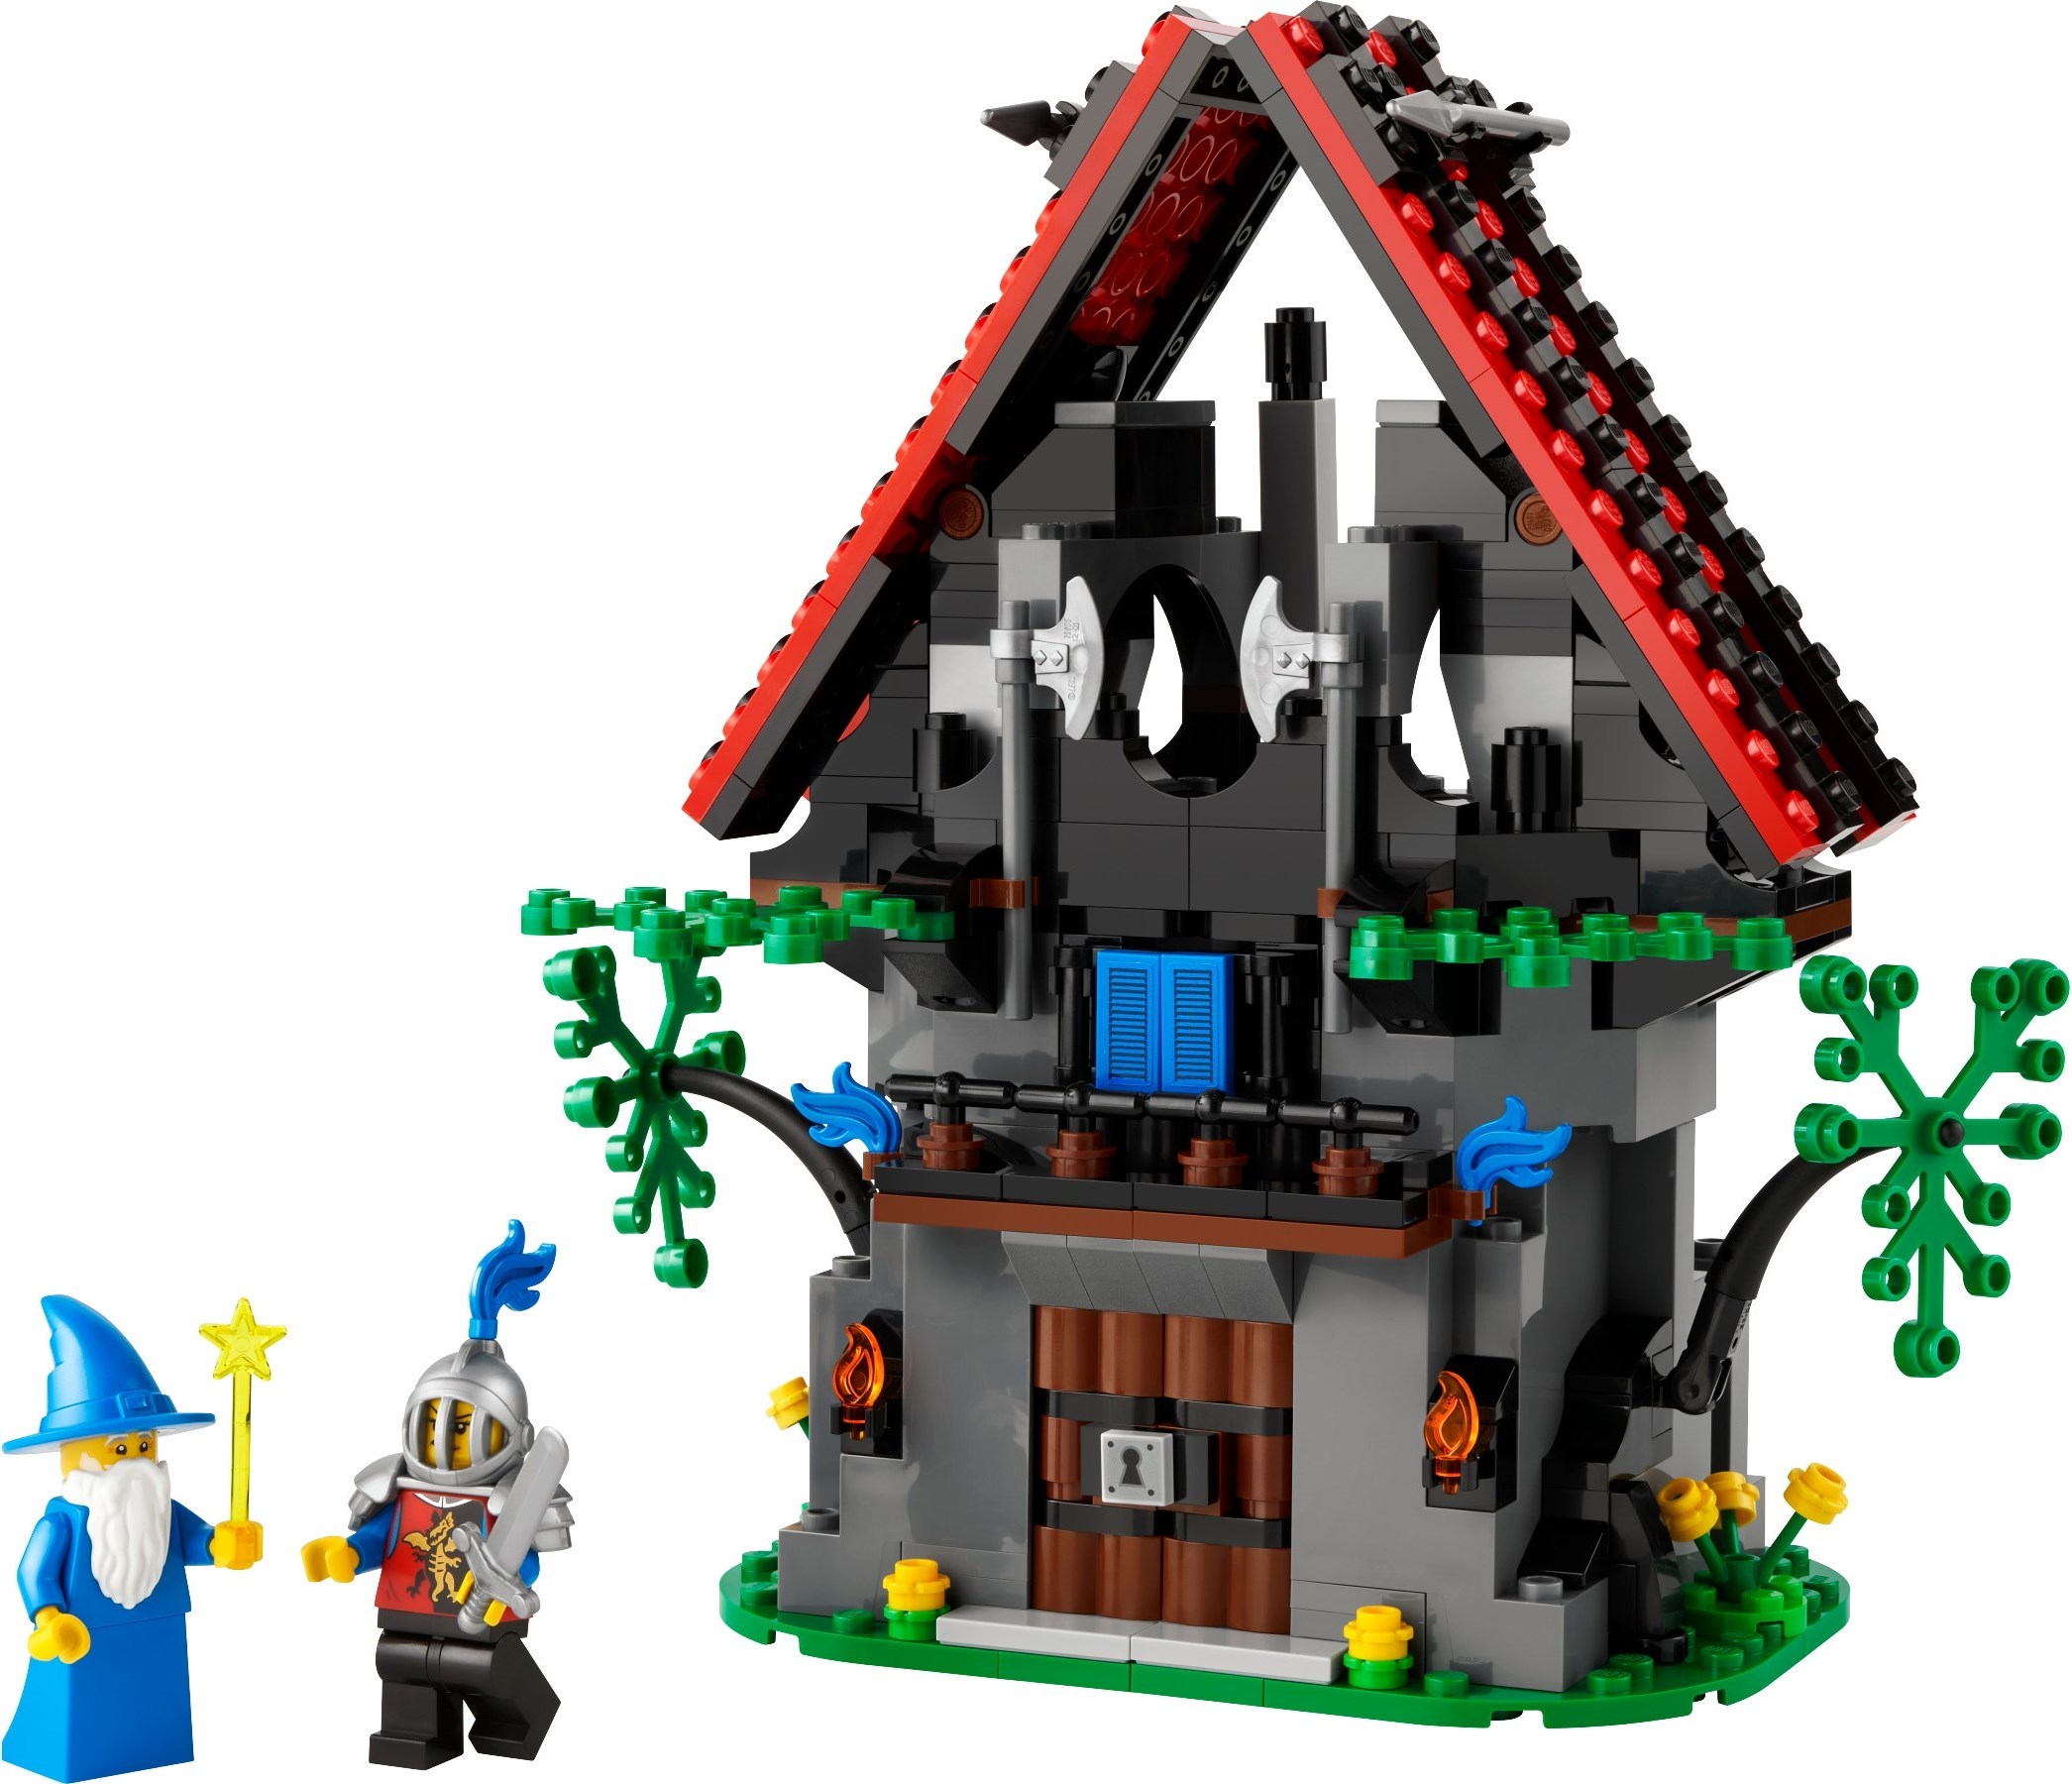 LEGO Japan takes Rebuilding the World to the next level